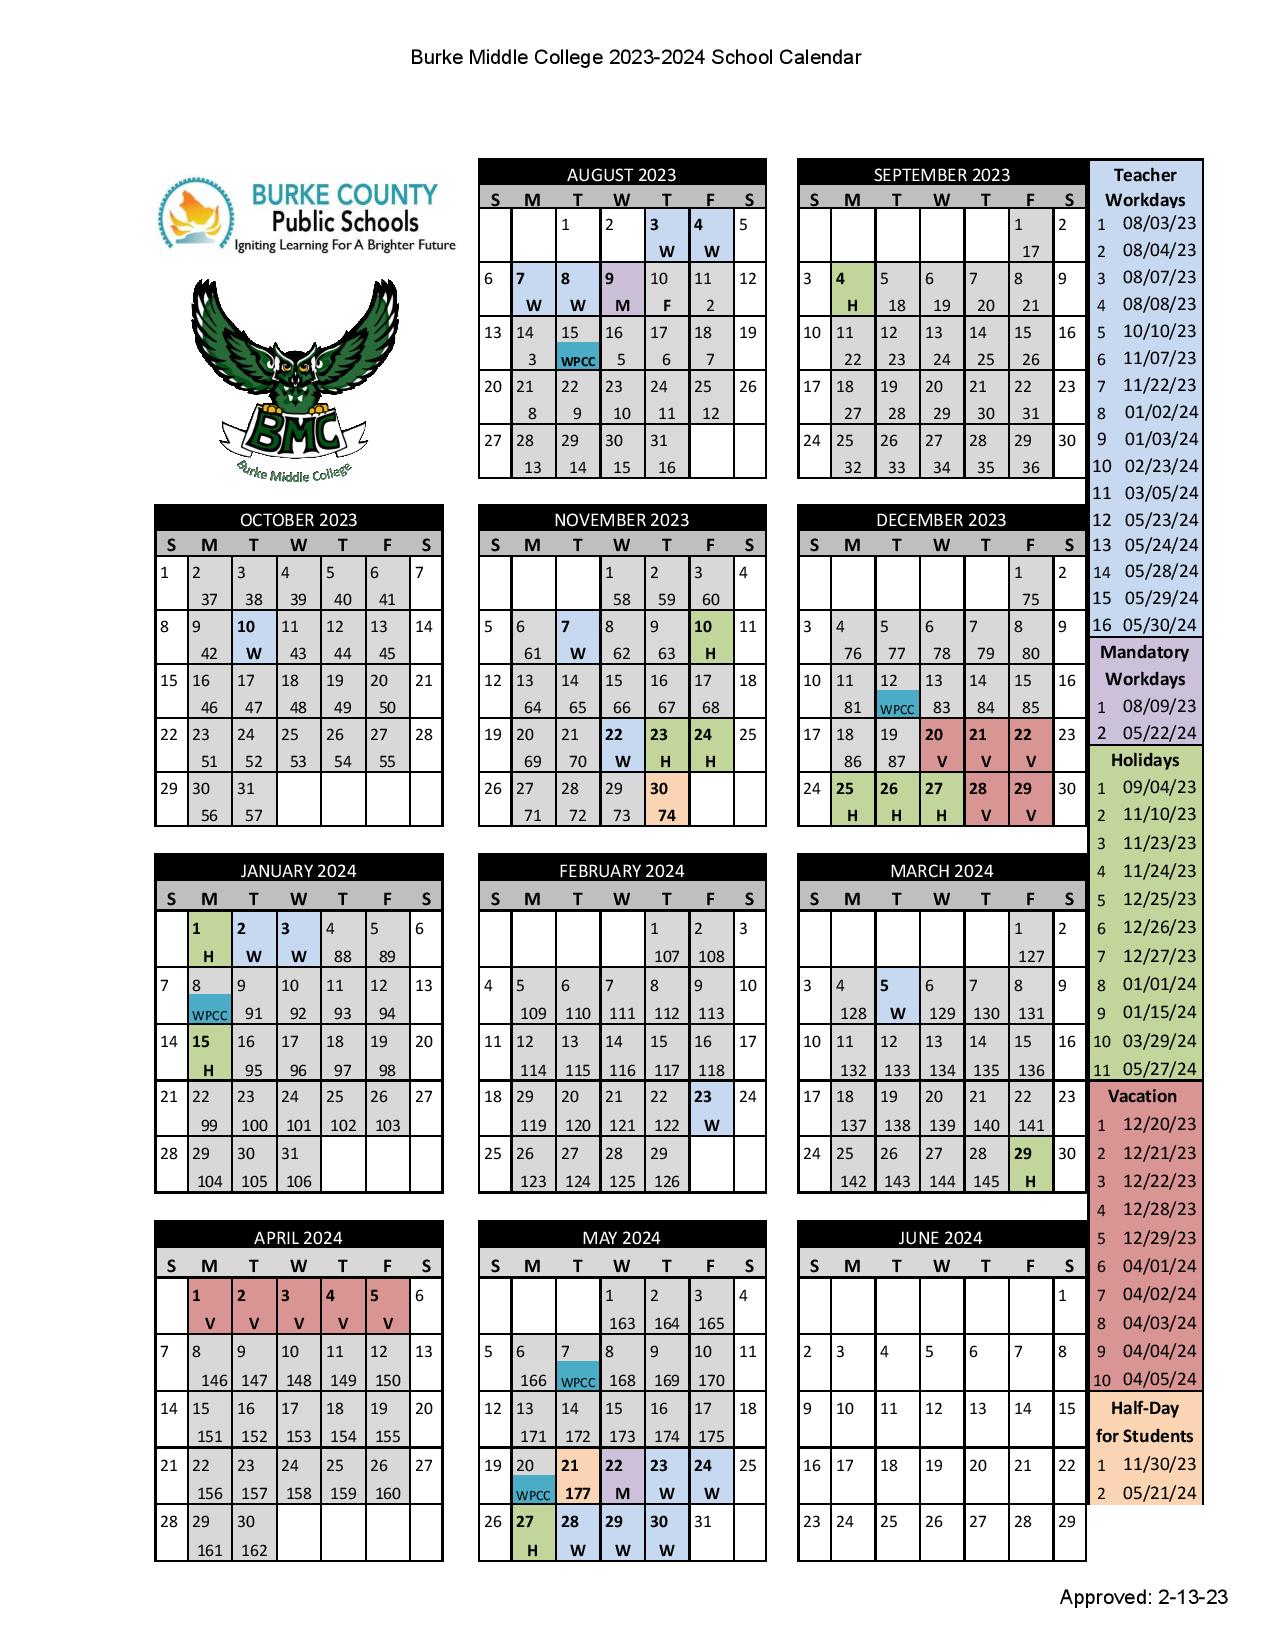 Burke County Schools Calendar 2023-2024 in PDF